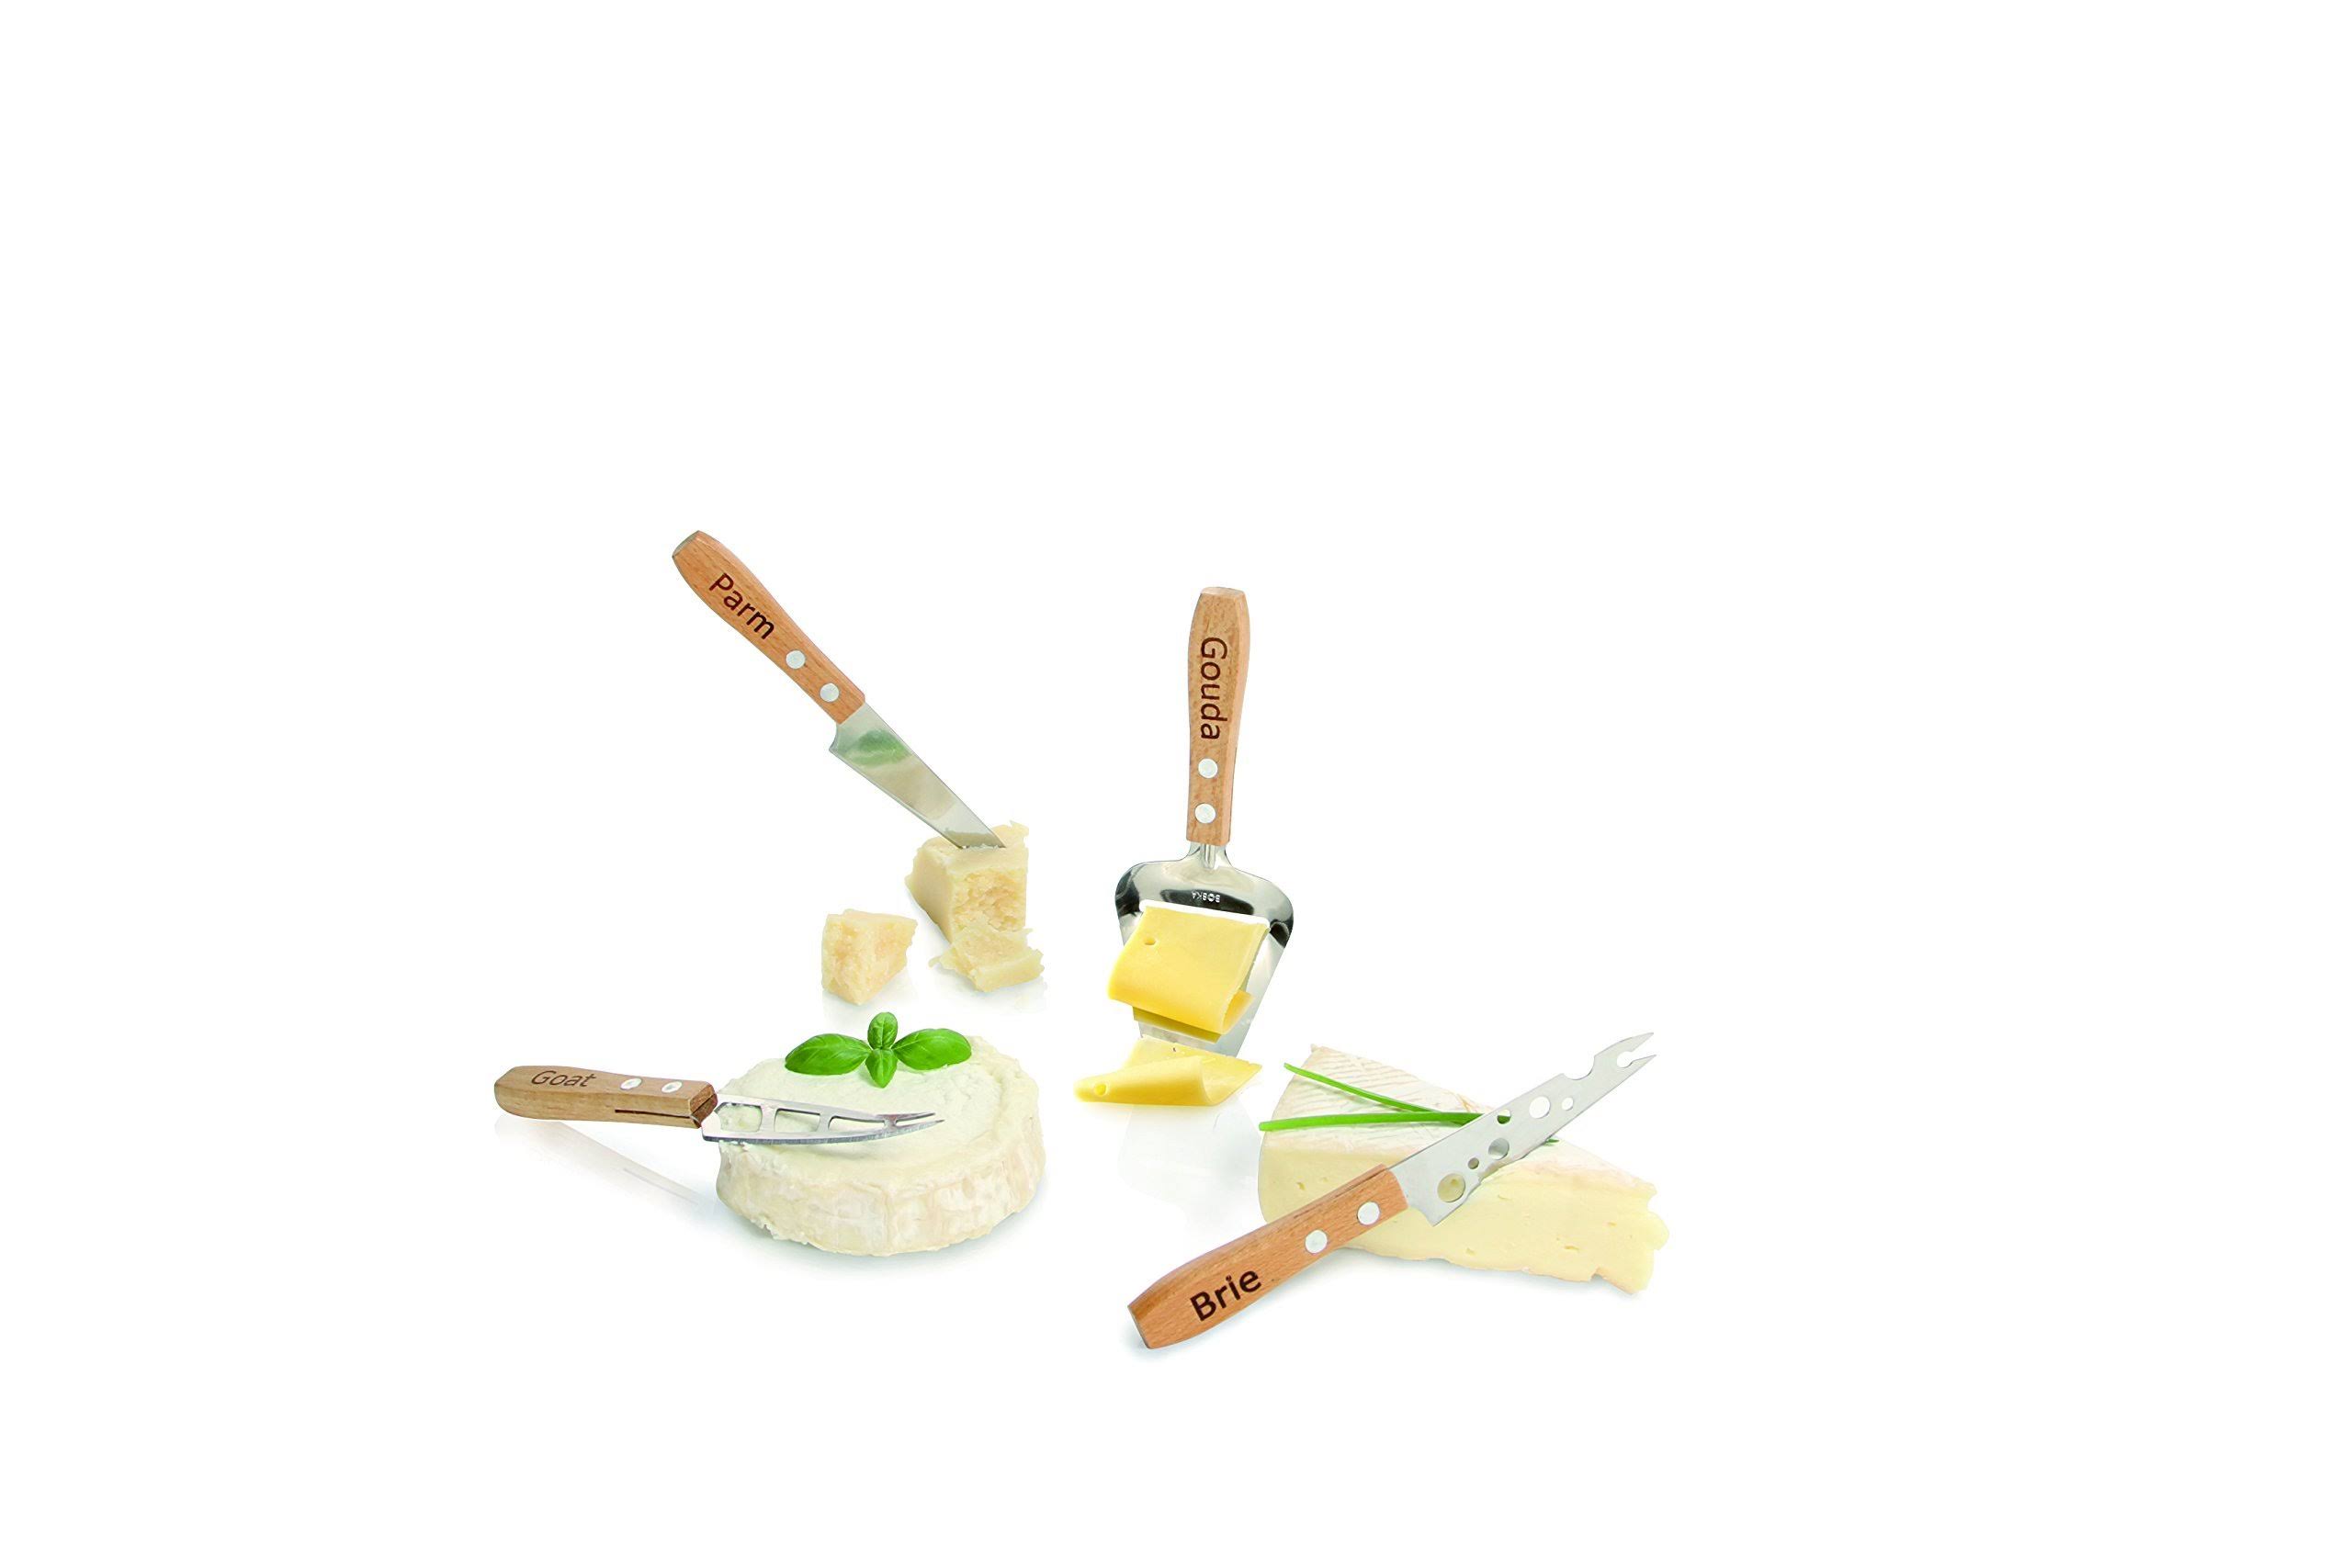 Boska Holland Explore Geneva Cheese Slicer and Knife Set - Stainless Steel, 4pcs